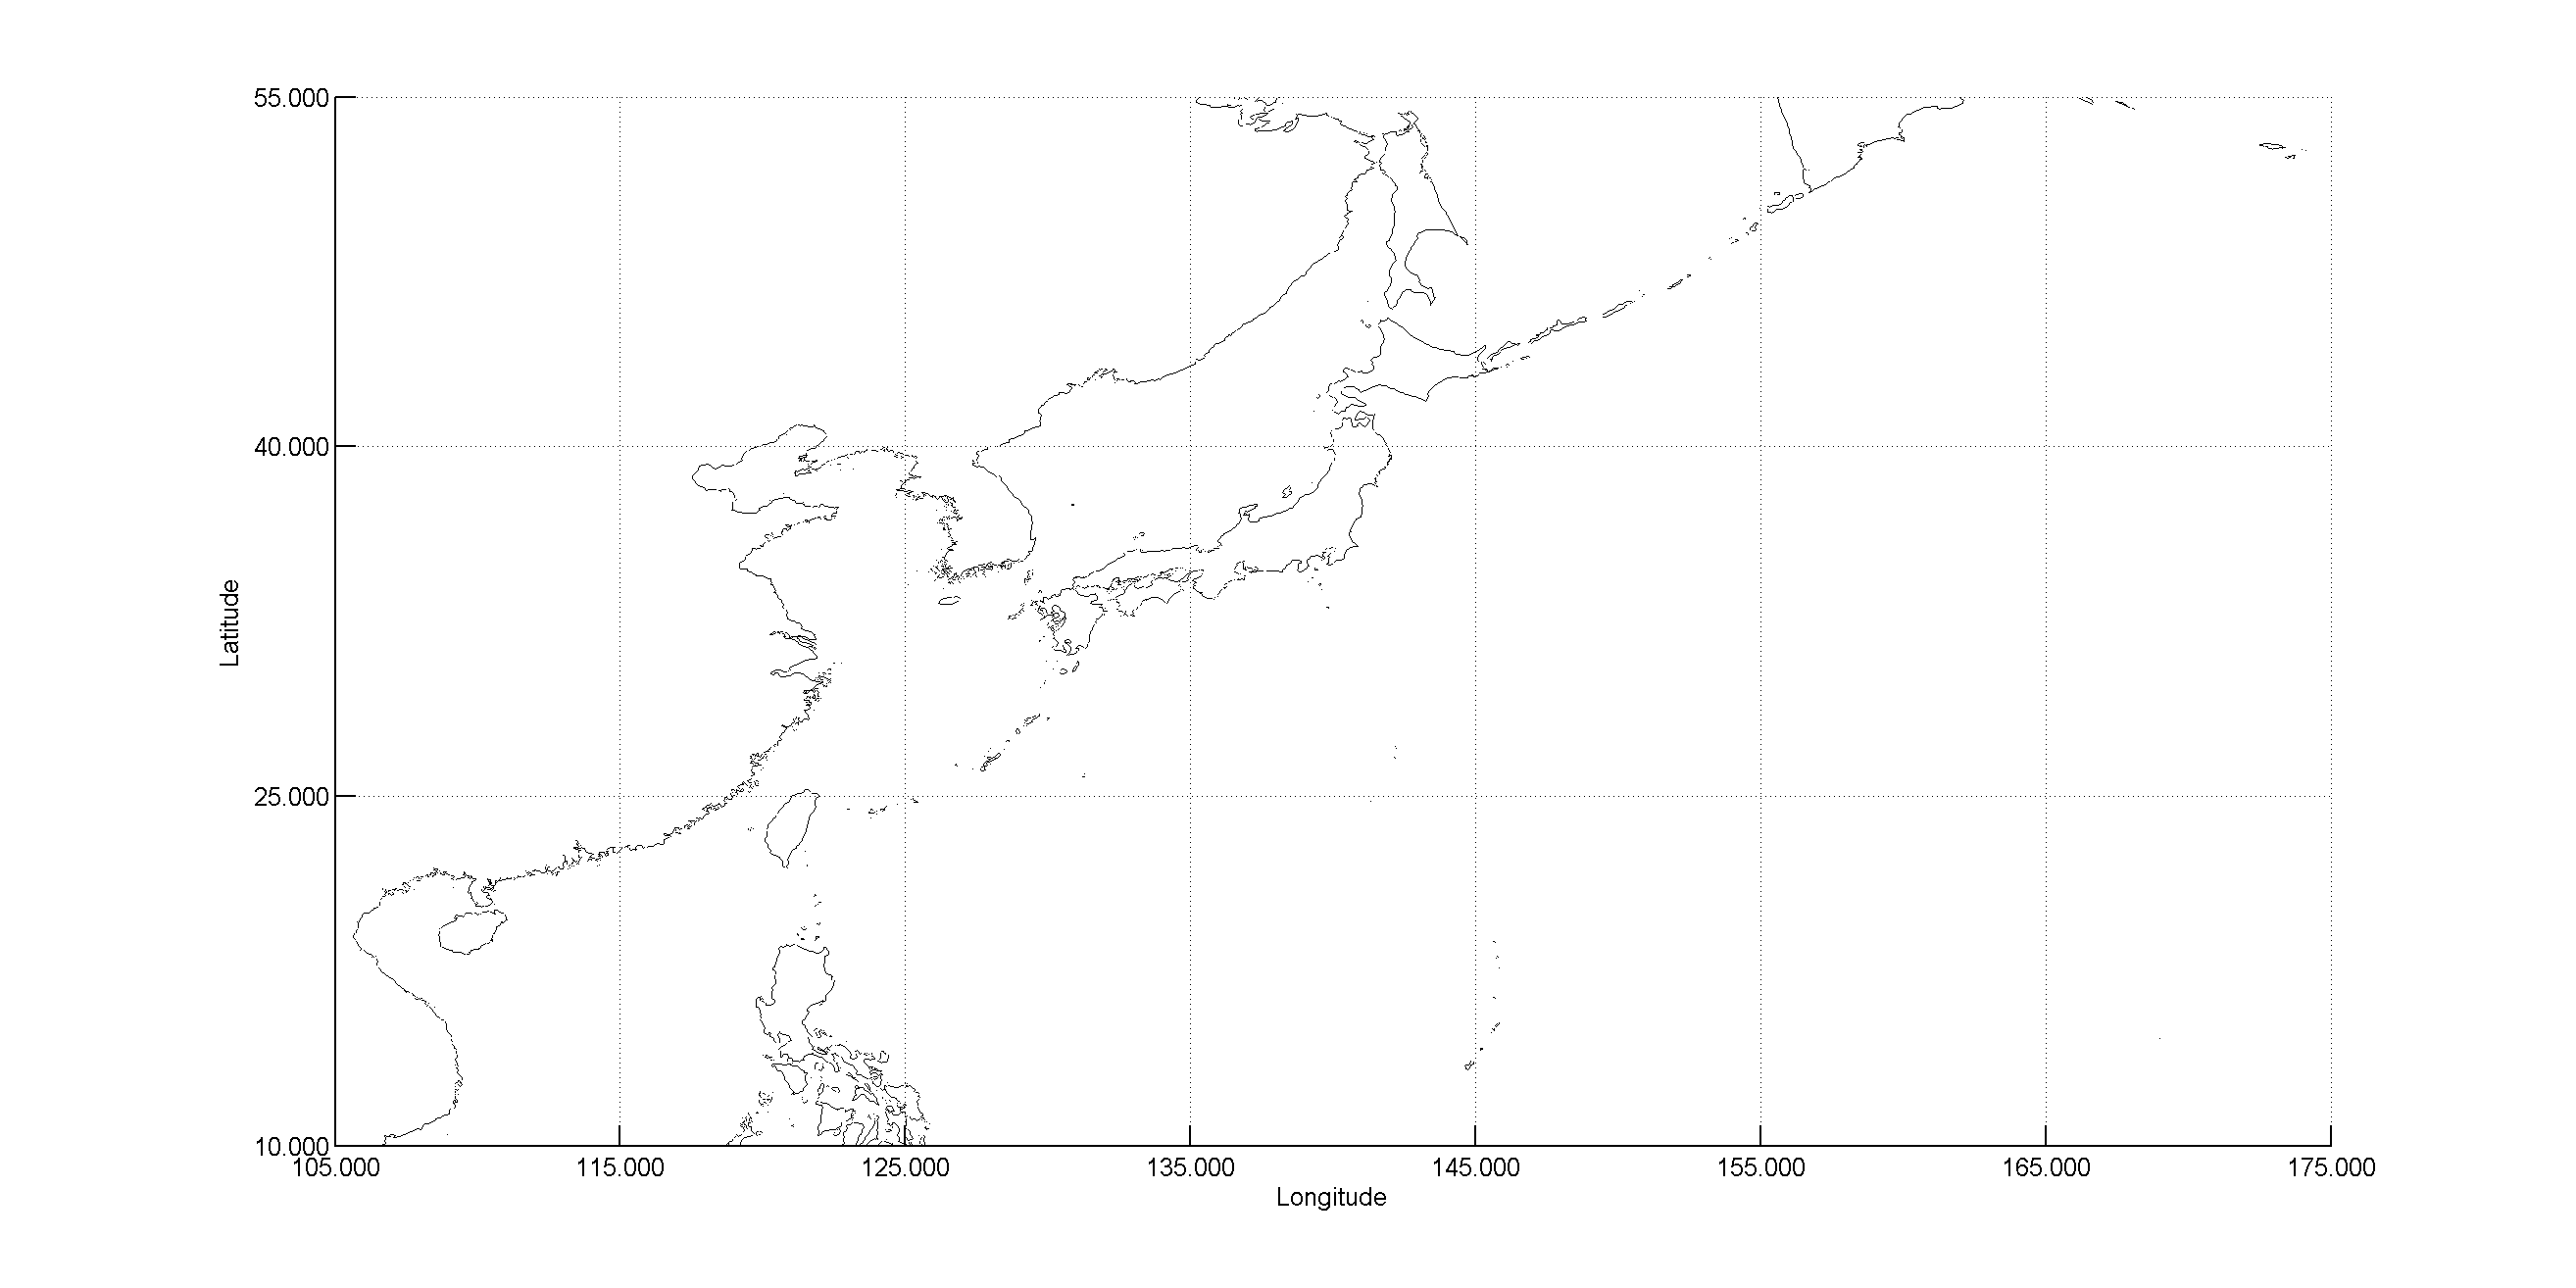 CYCLE_126 - Japan Descending passes